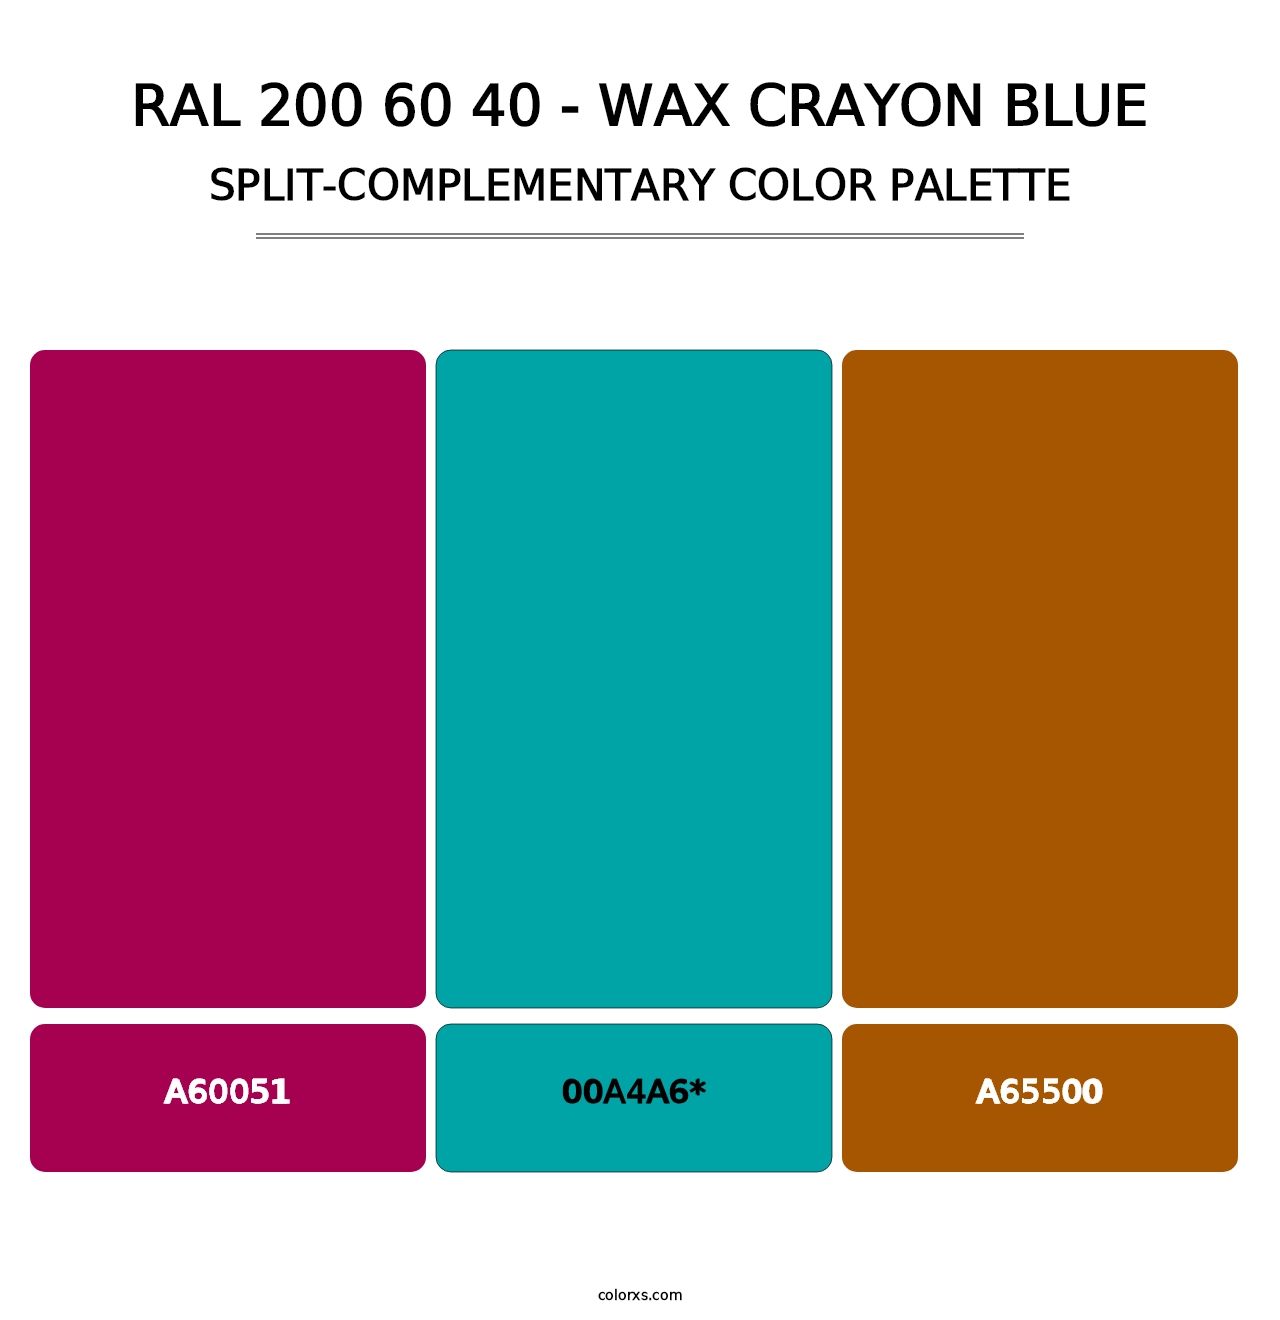 RAL 200 60 40 - Wax Crayon Blue - Split-Complementary Color Palette